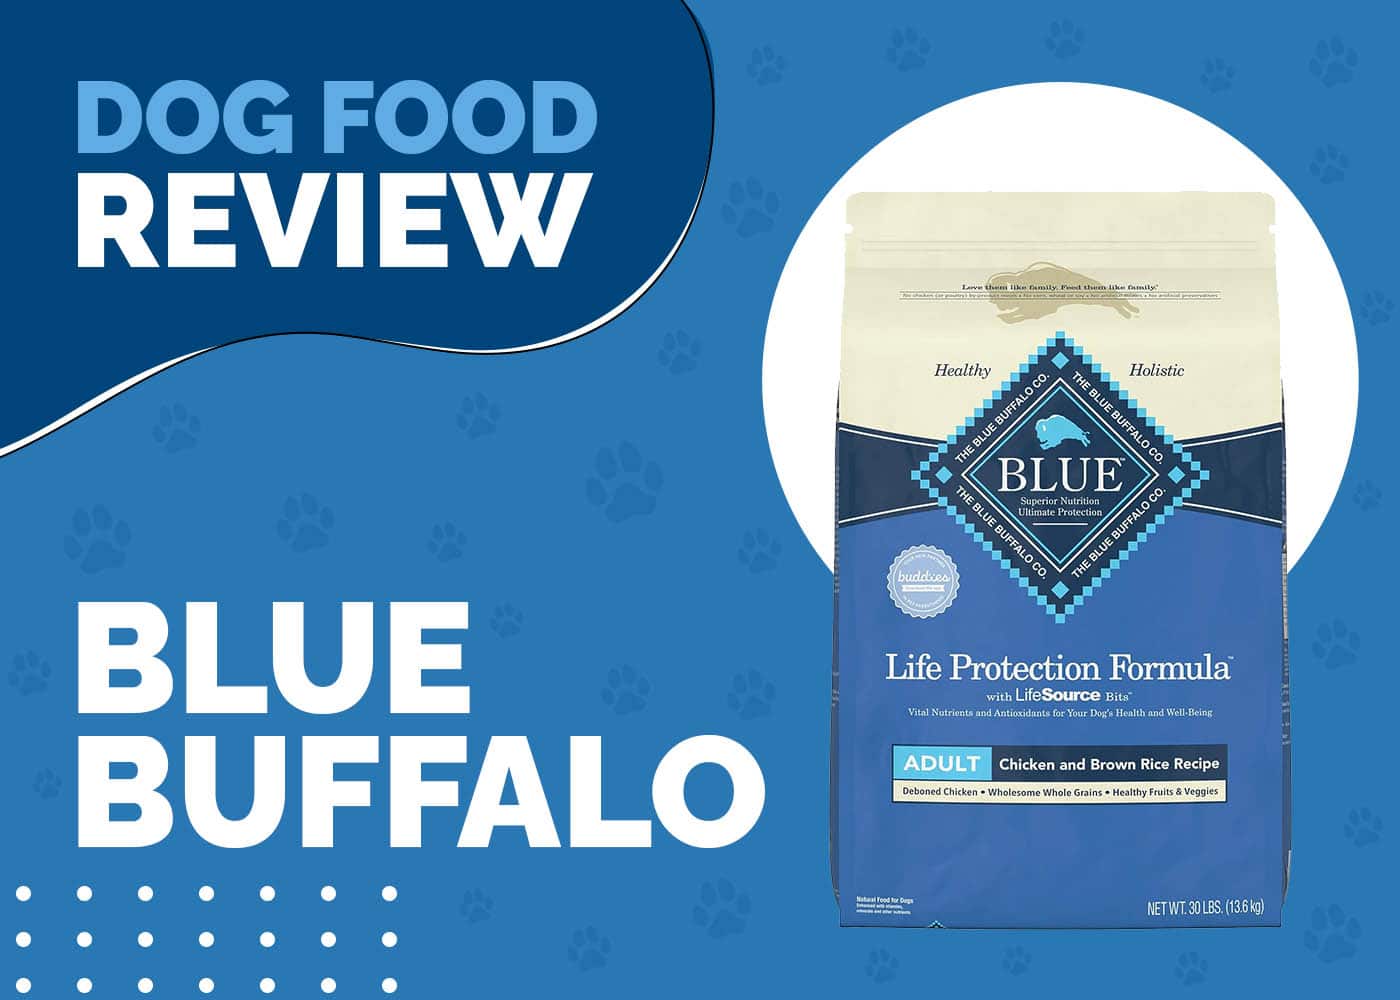 Blue Buffalo Dog Food Review